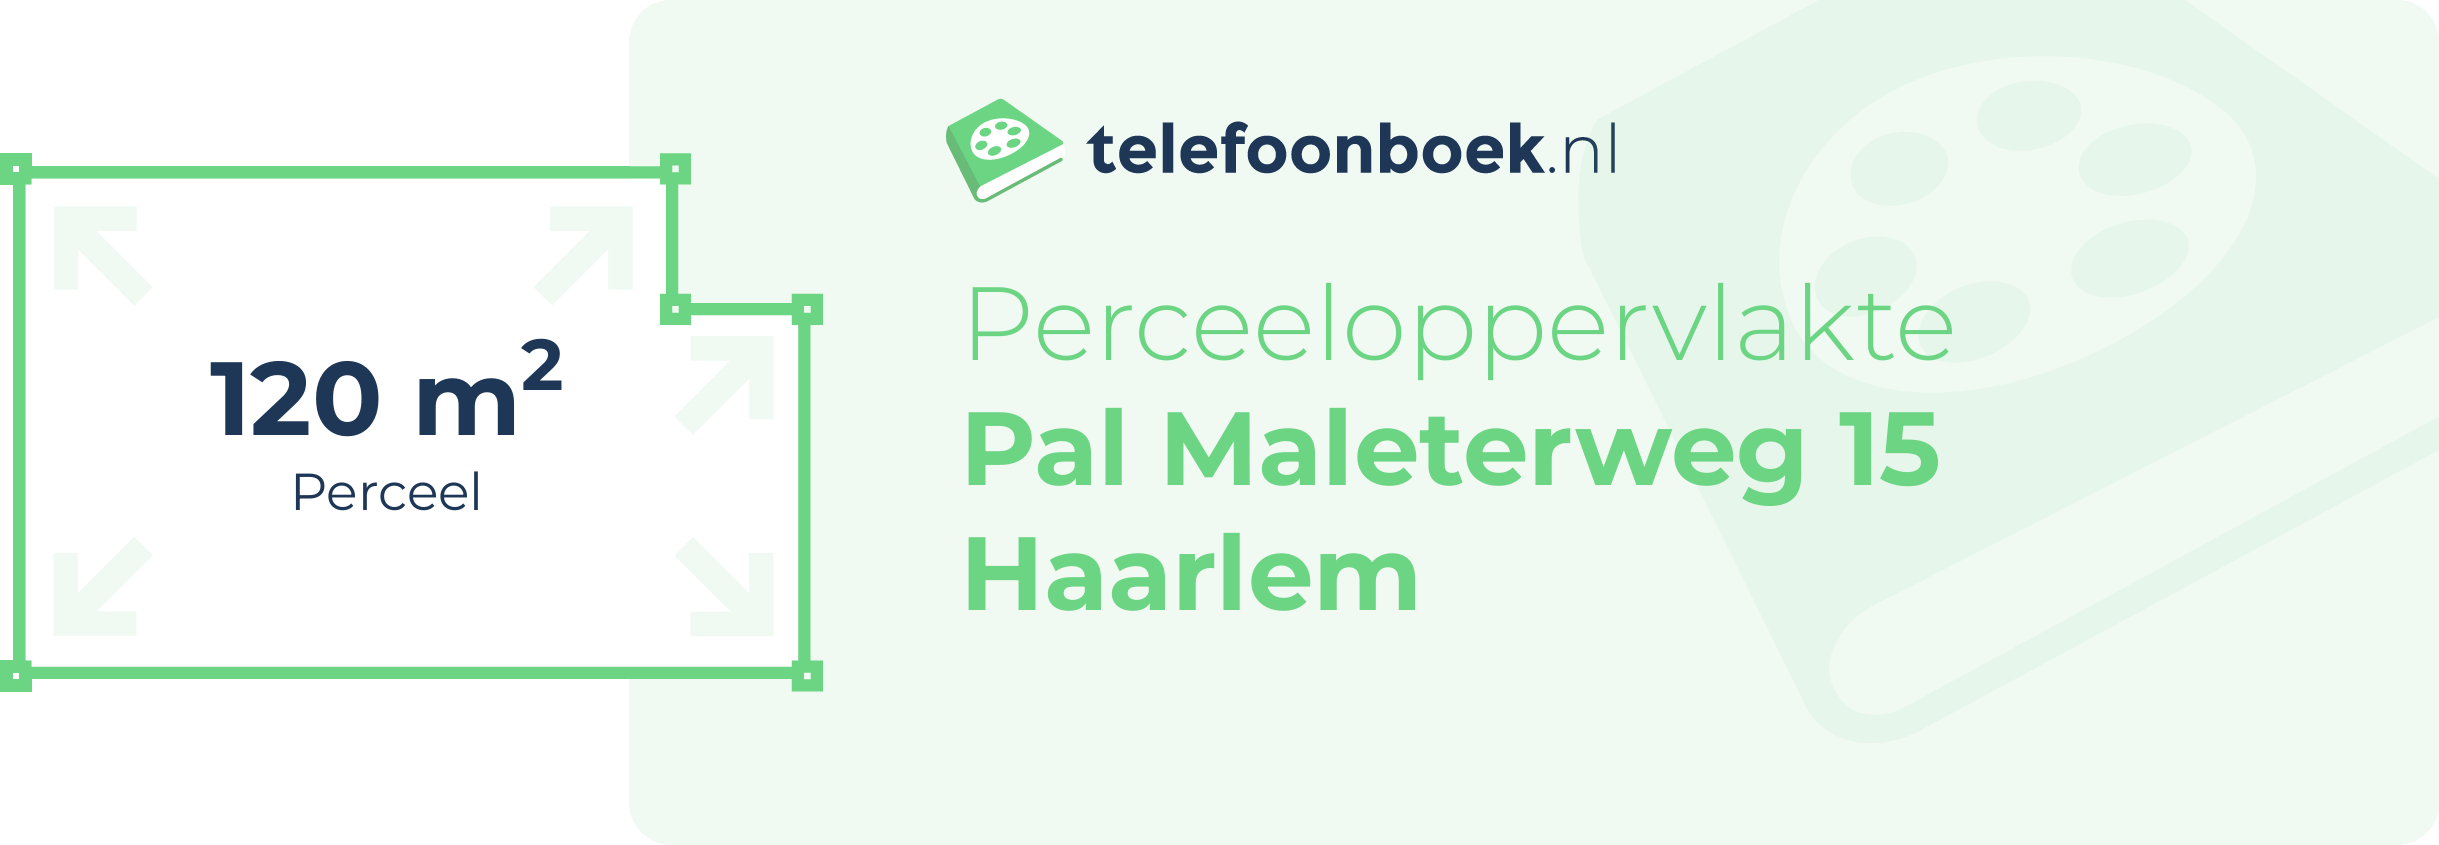 Perceeloppervlakte Pal Maleterweg 15 Haarlem